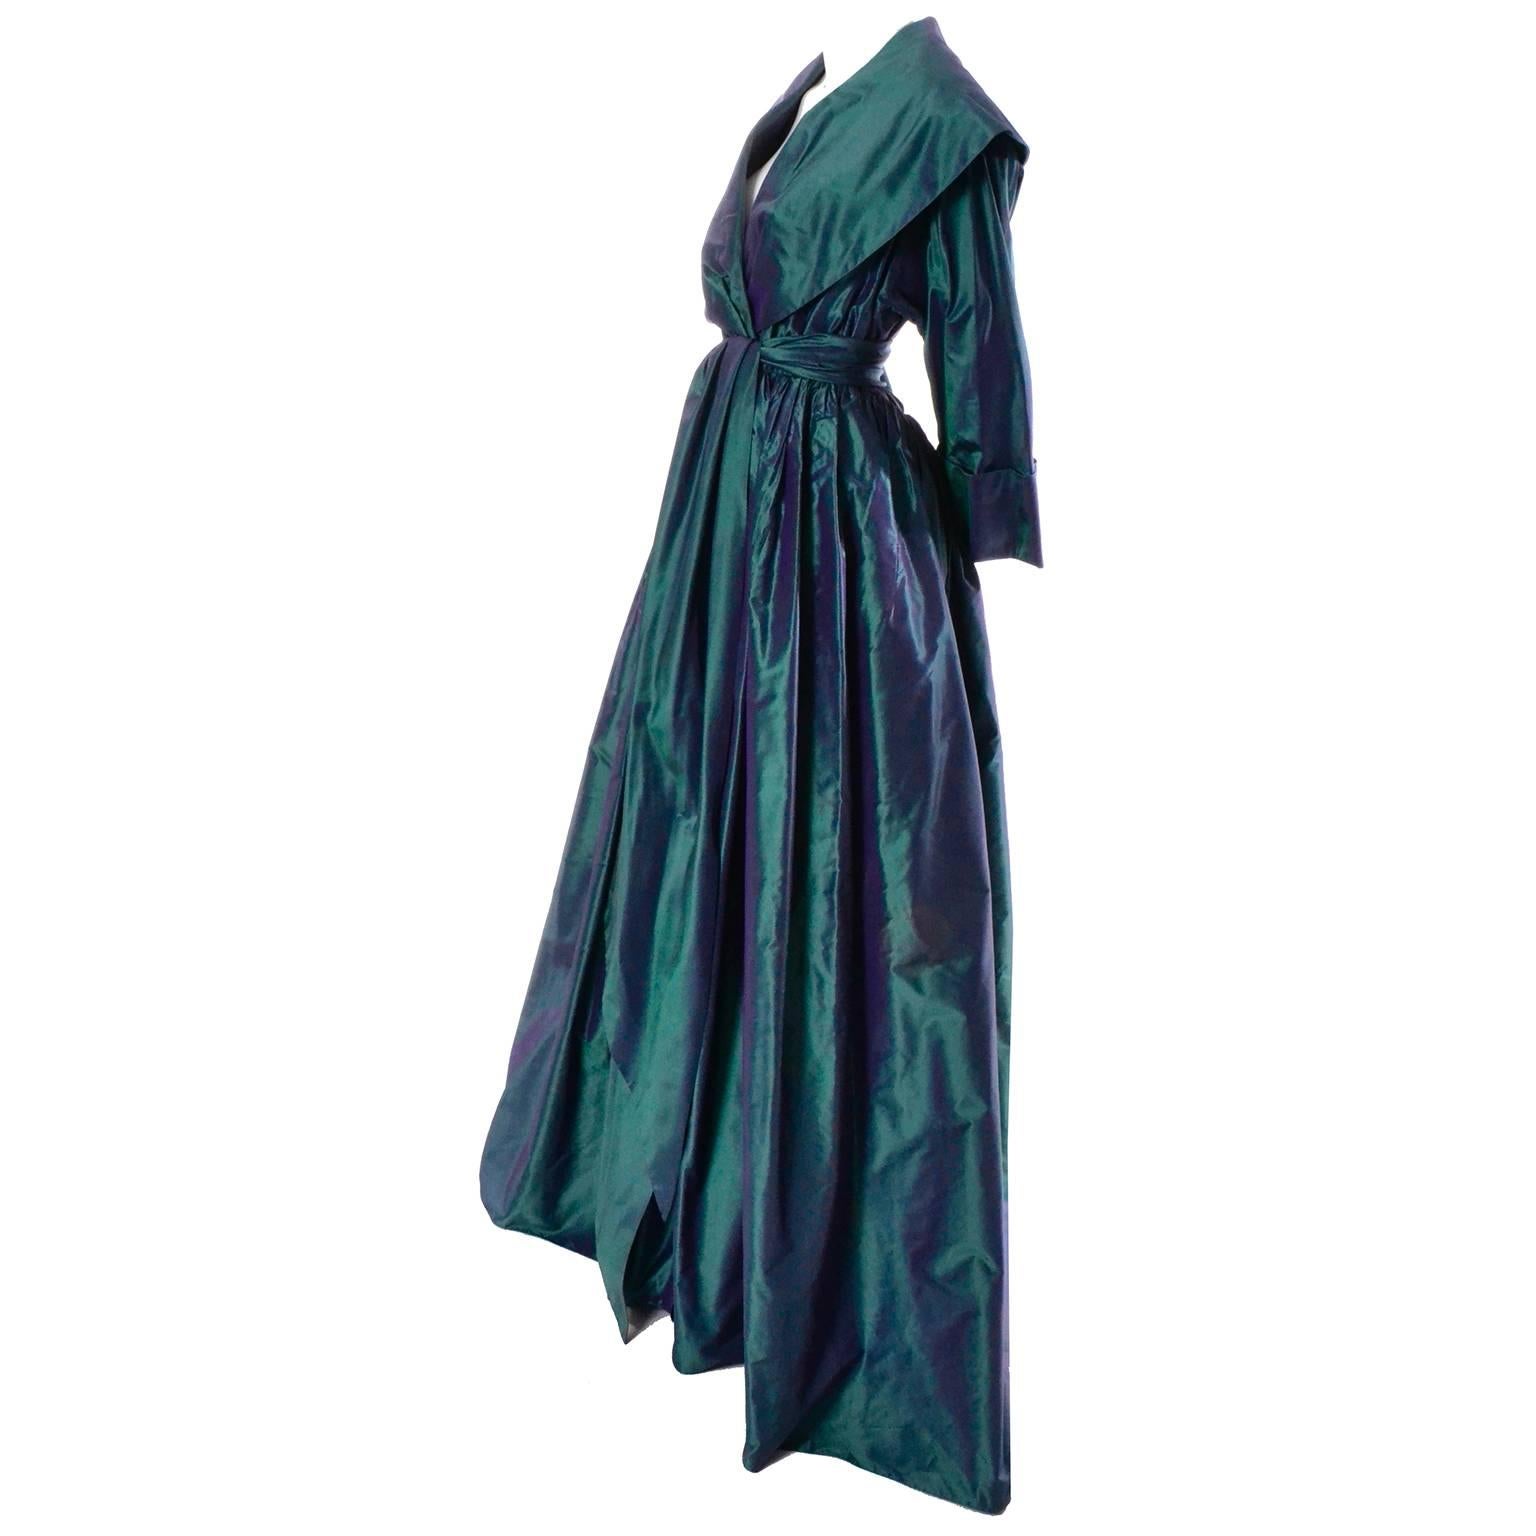 Carolyne Roehm Vintage Dress in Iridescent Green Taffeta From Bergdorf Goodman 2